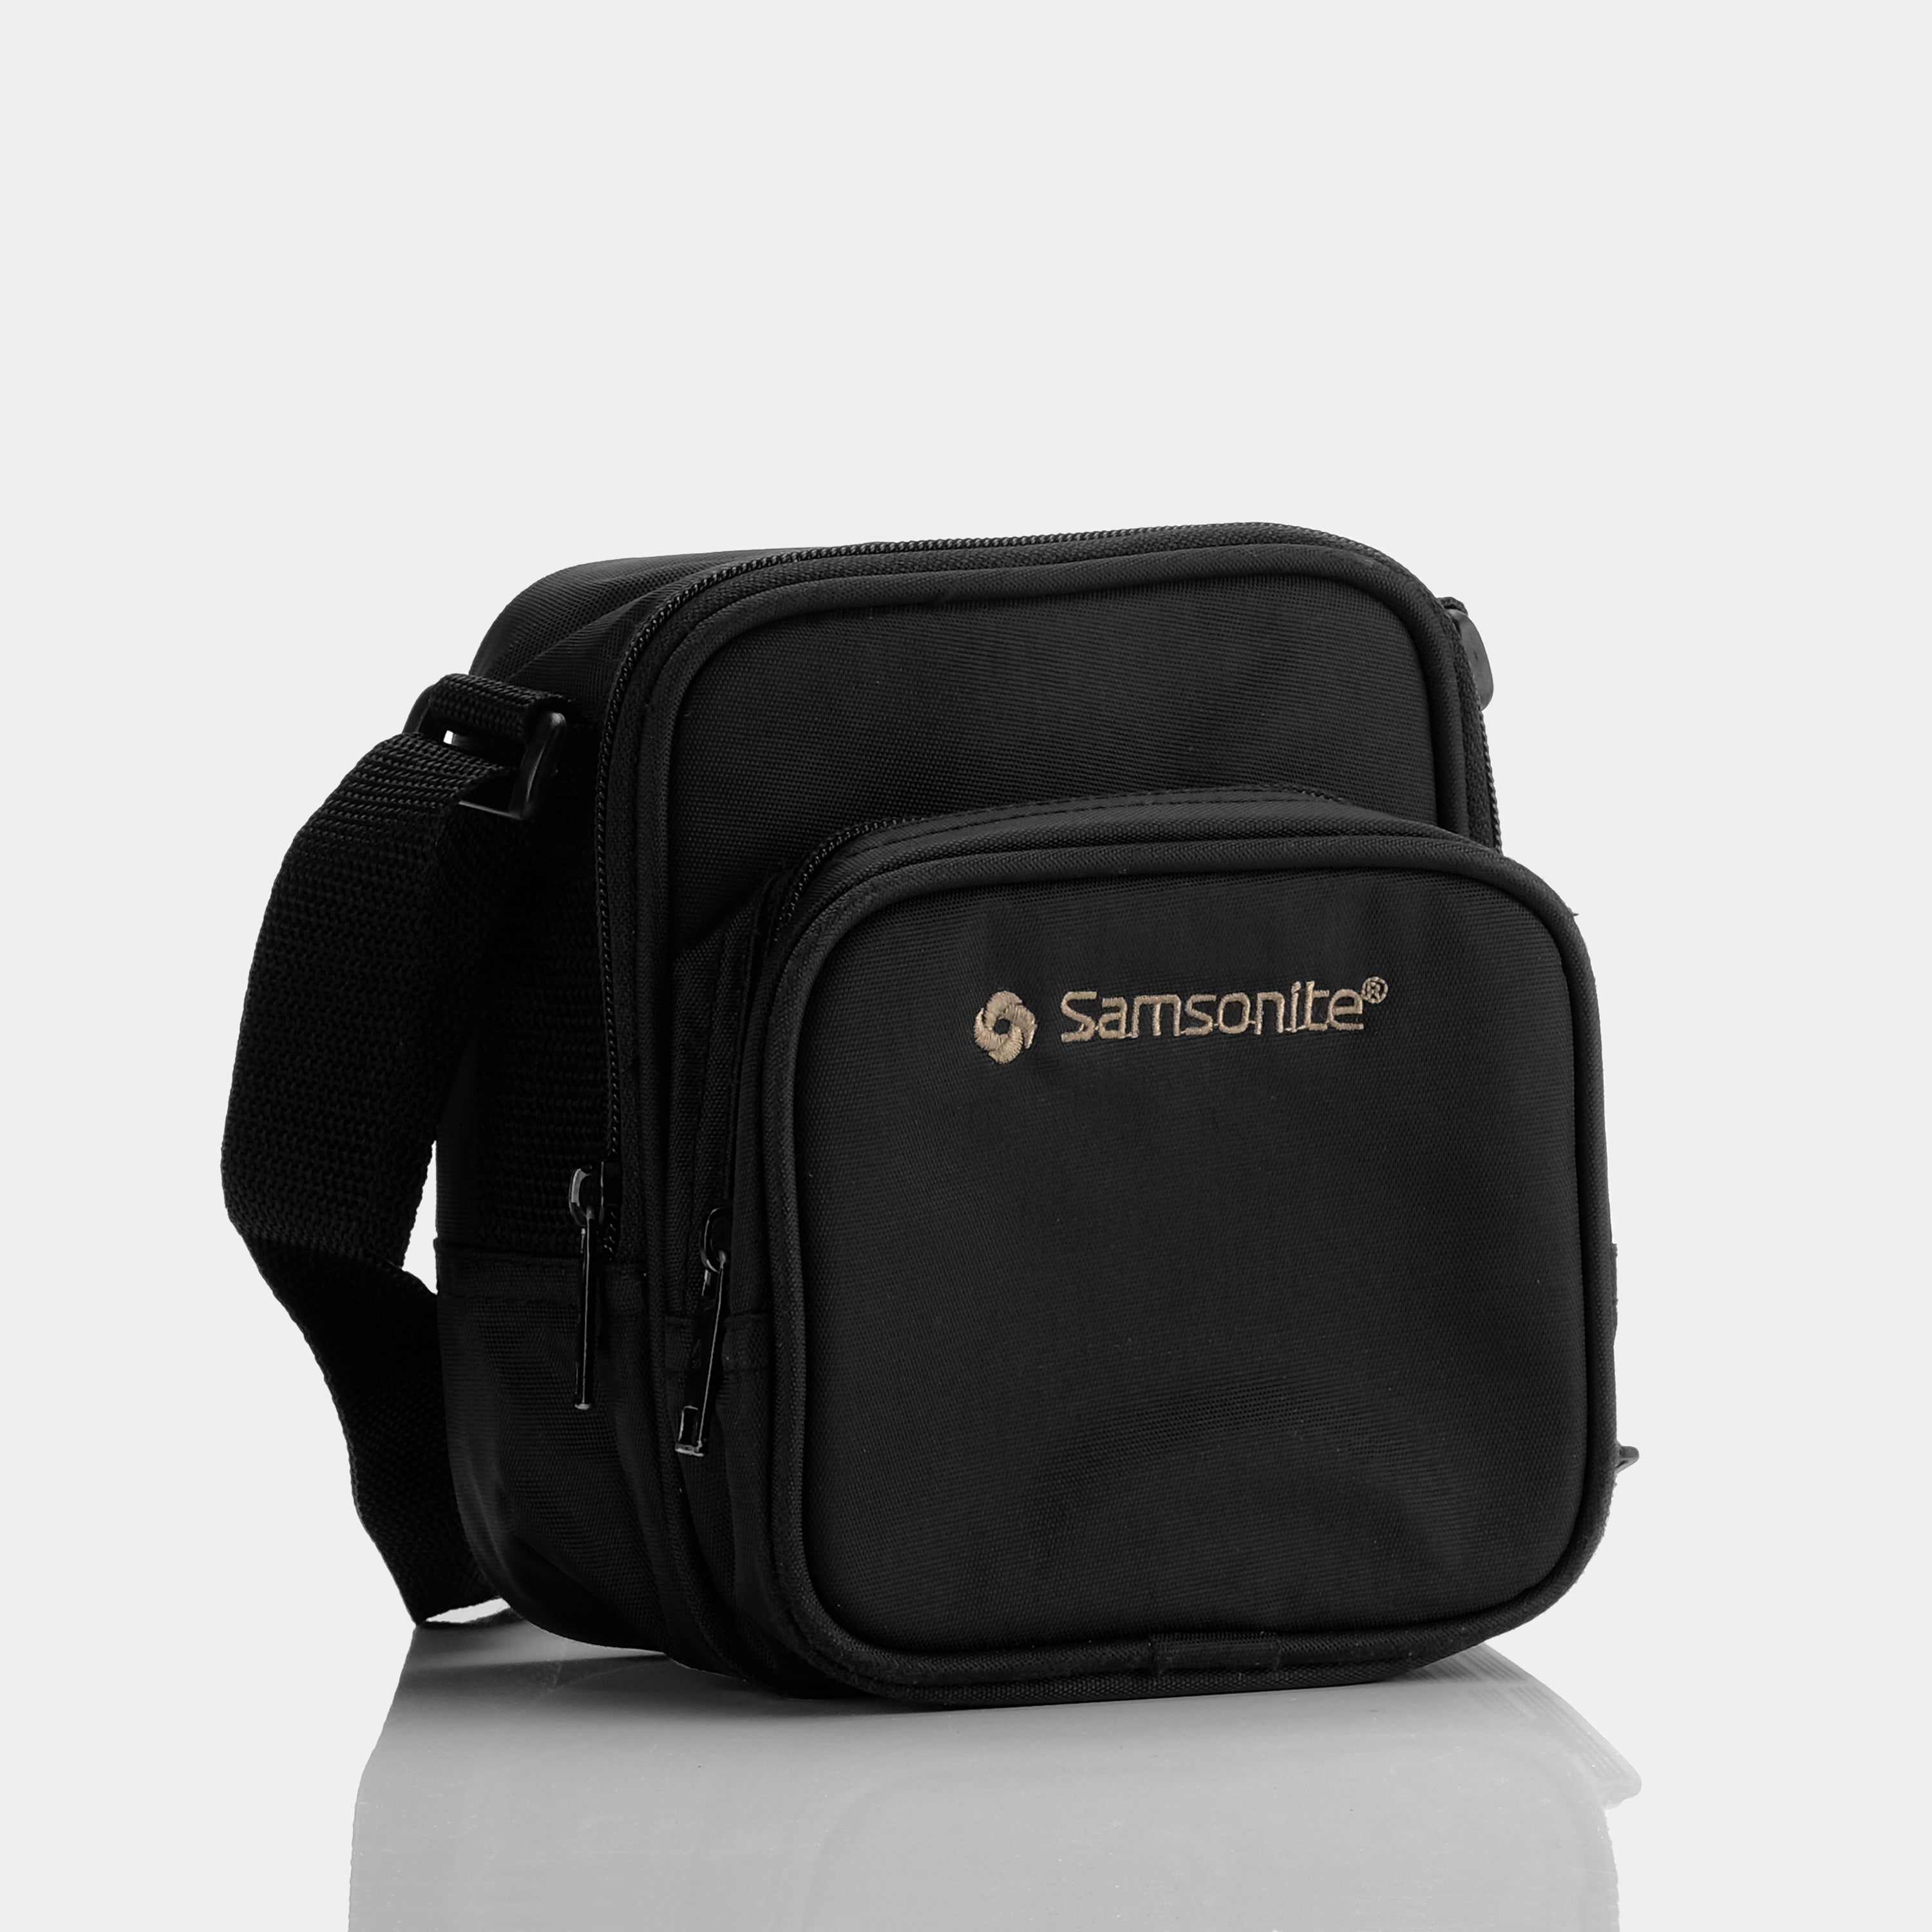 Samsonite Black 35mm Camera Case